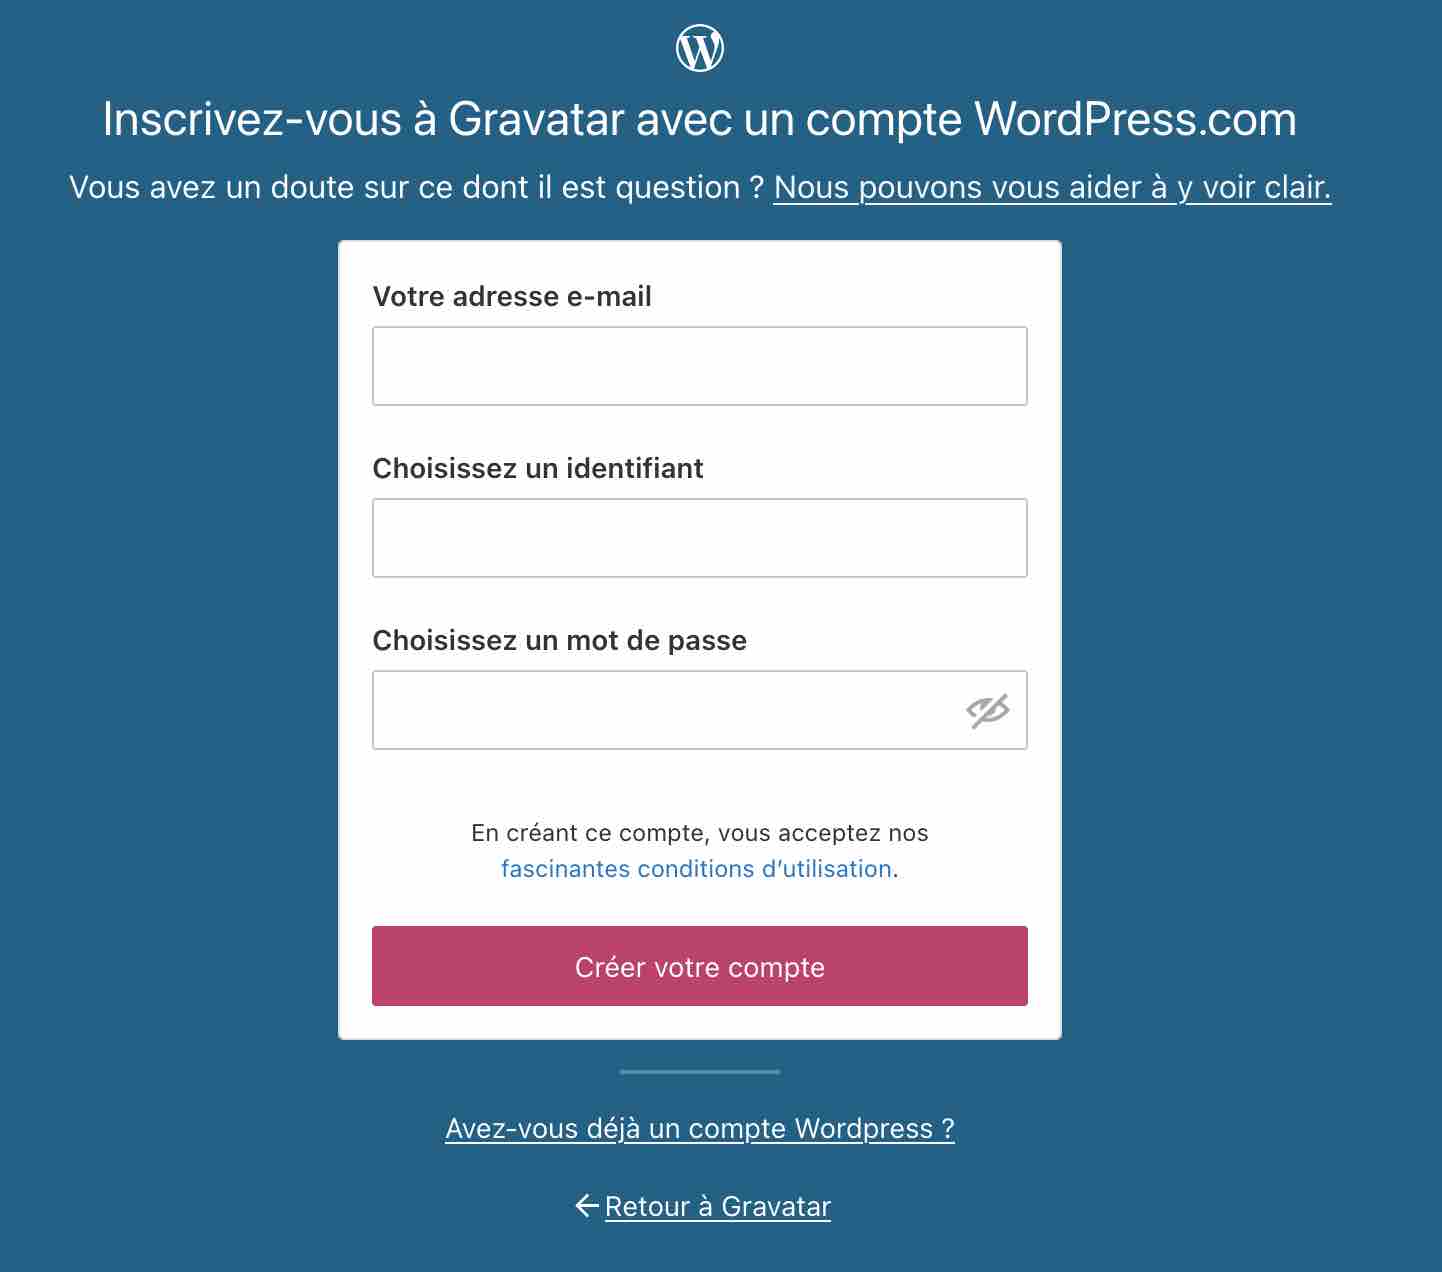 Inscription Gravatar avec WordPress.com